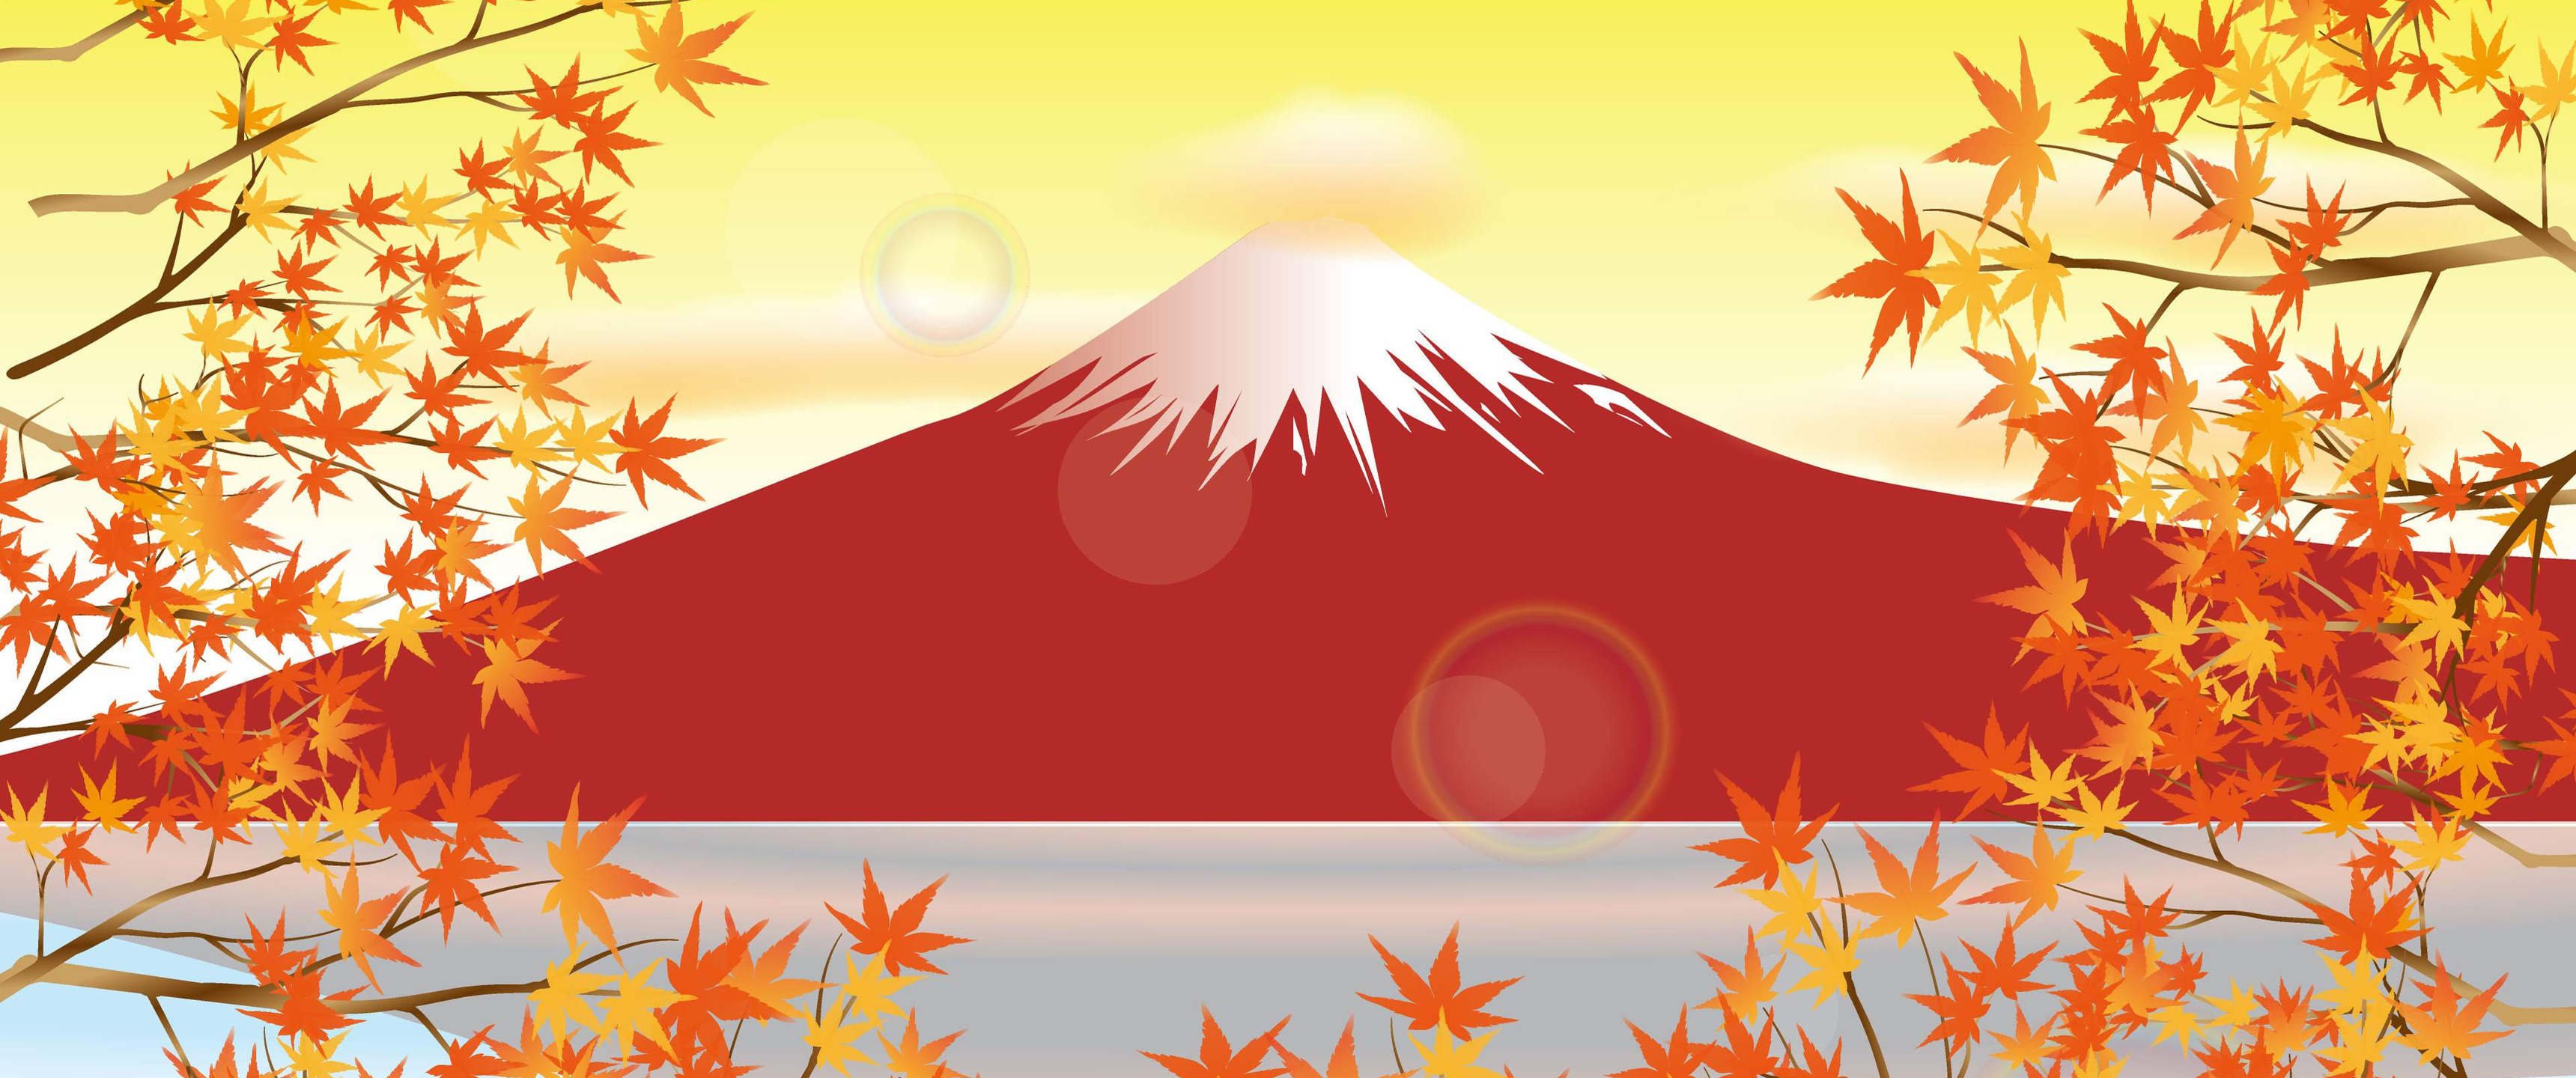 Download japan autumn art japan autumn art wallpaper in x resolution